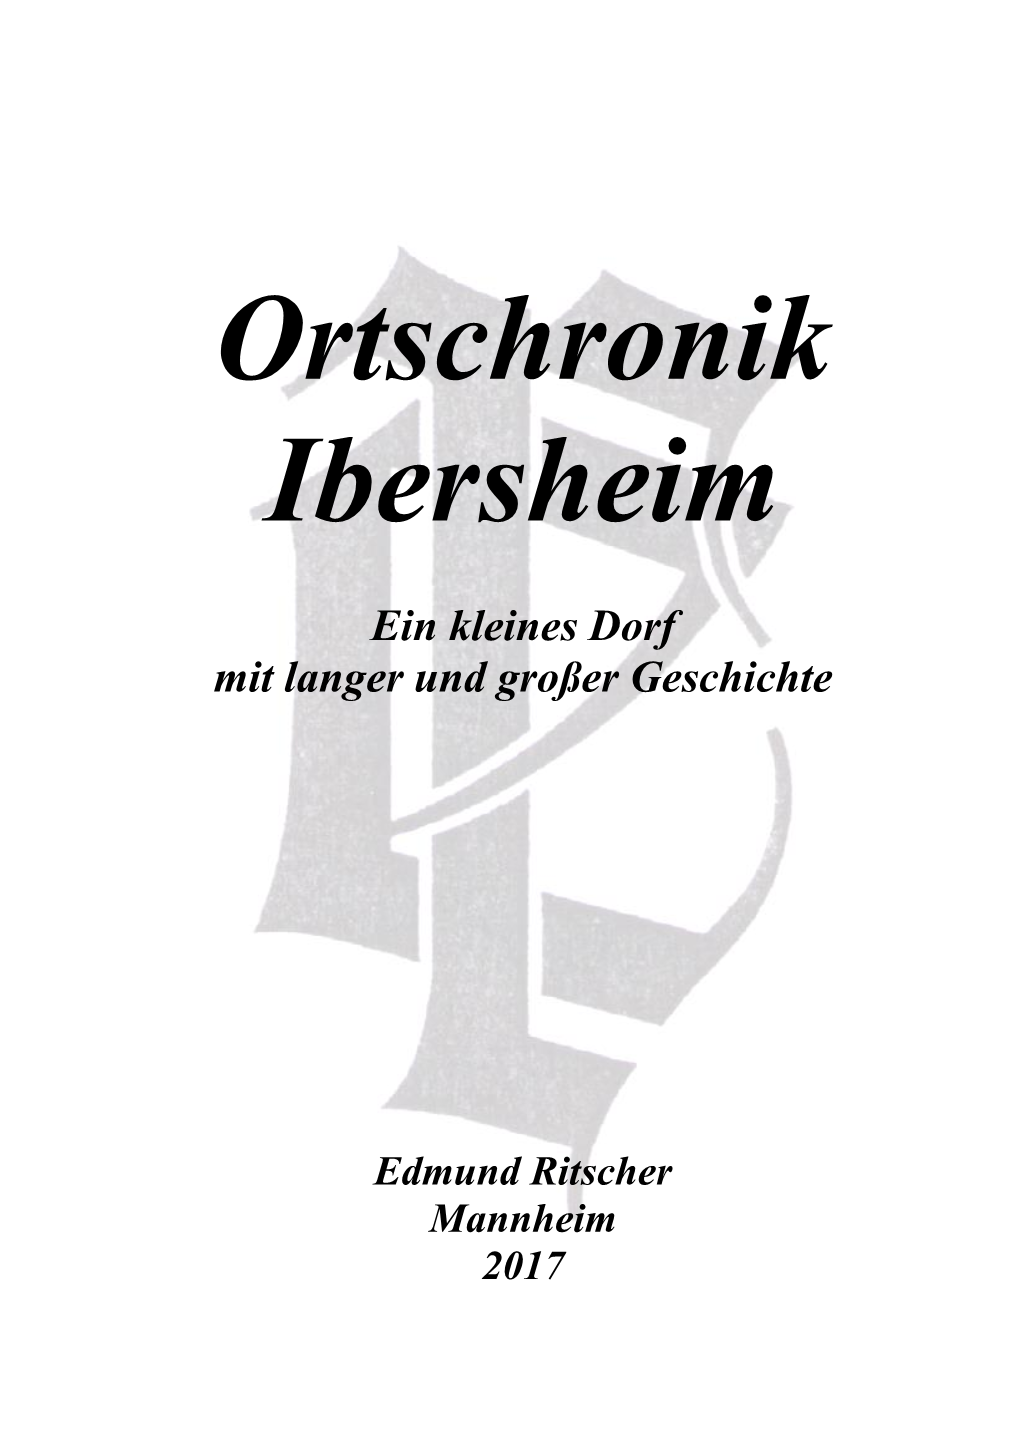 Ortschronik Ibersheim